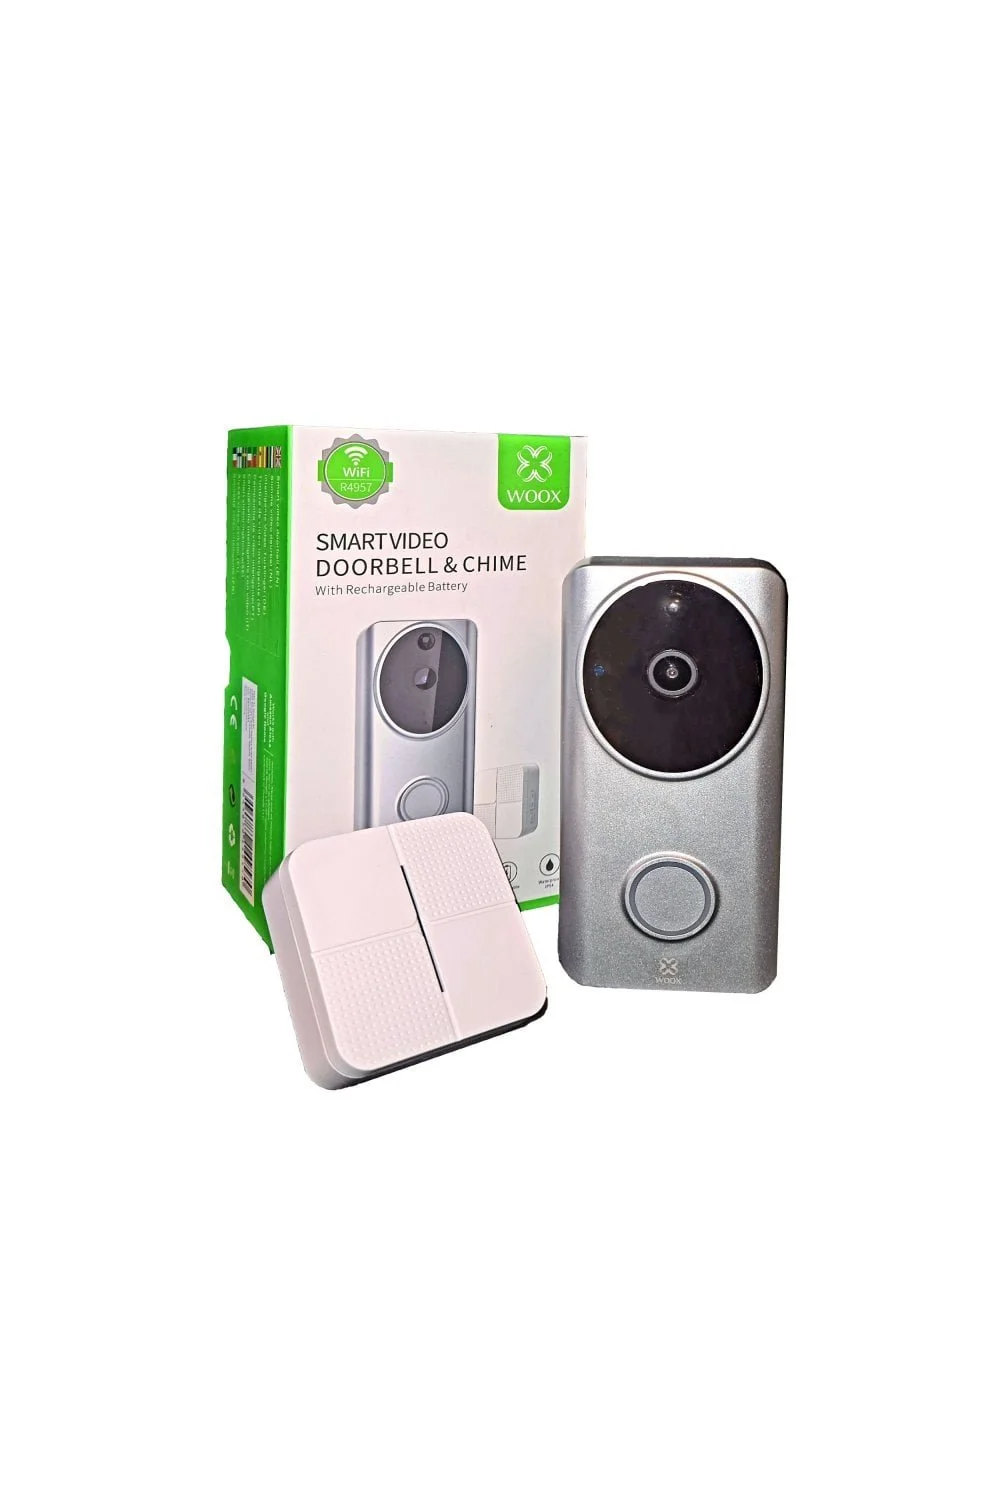 Woox видеозвънец с двупосочно аудио Doorbell - R4957 - Smart WiFi Video Doorbell and Chime - image 5